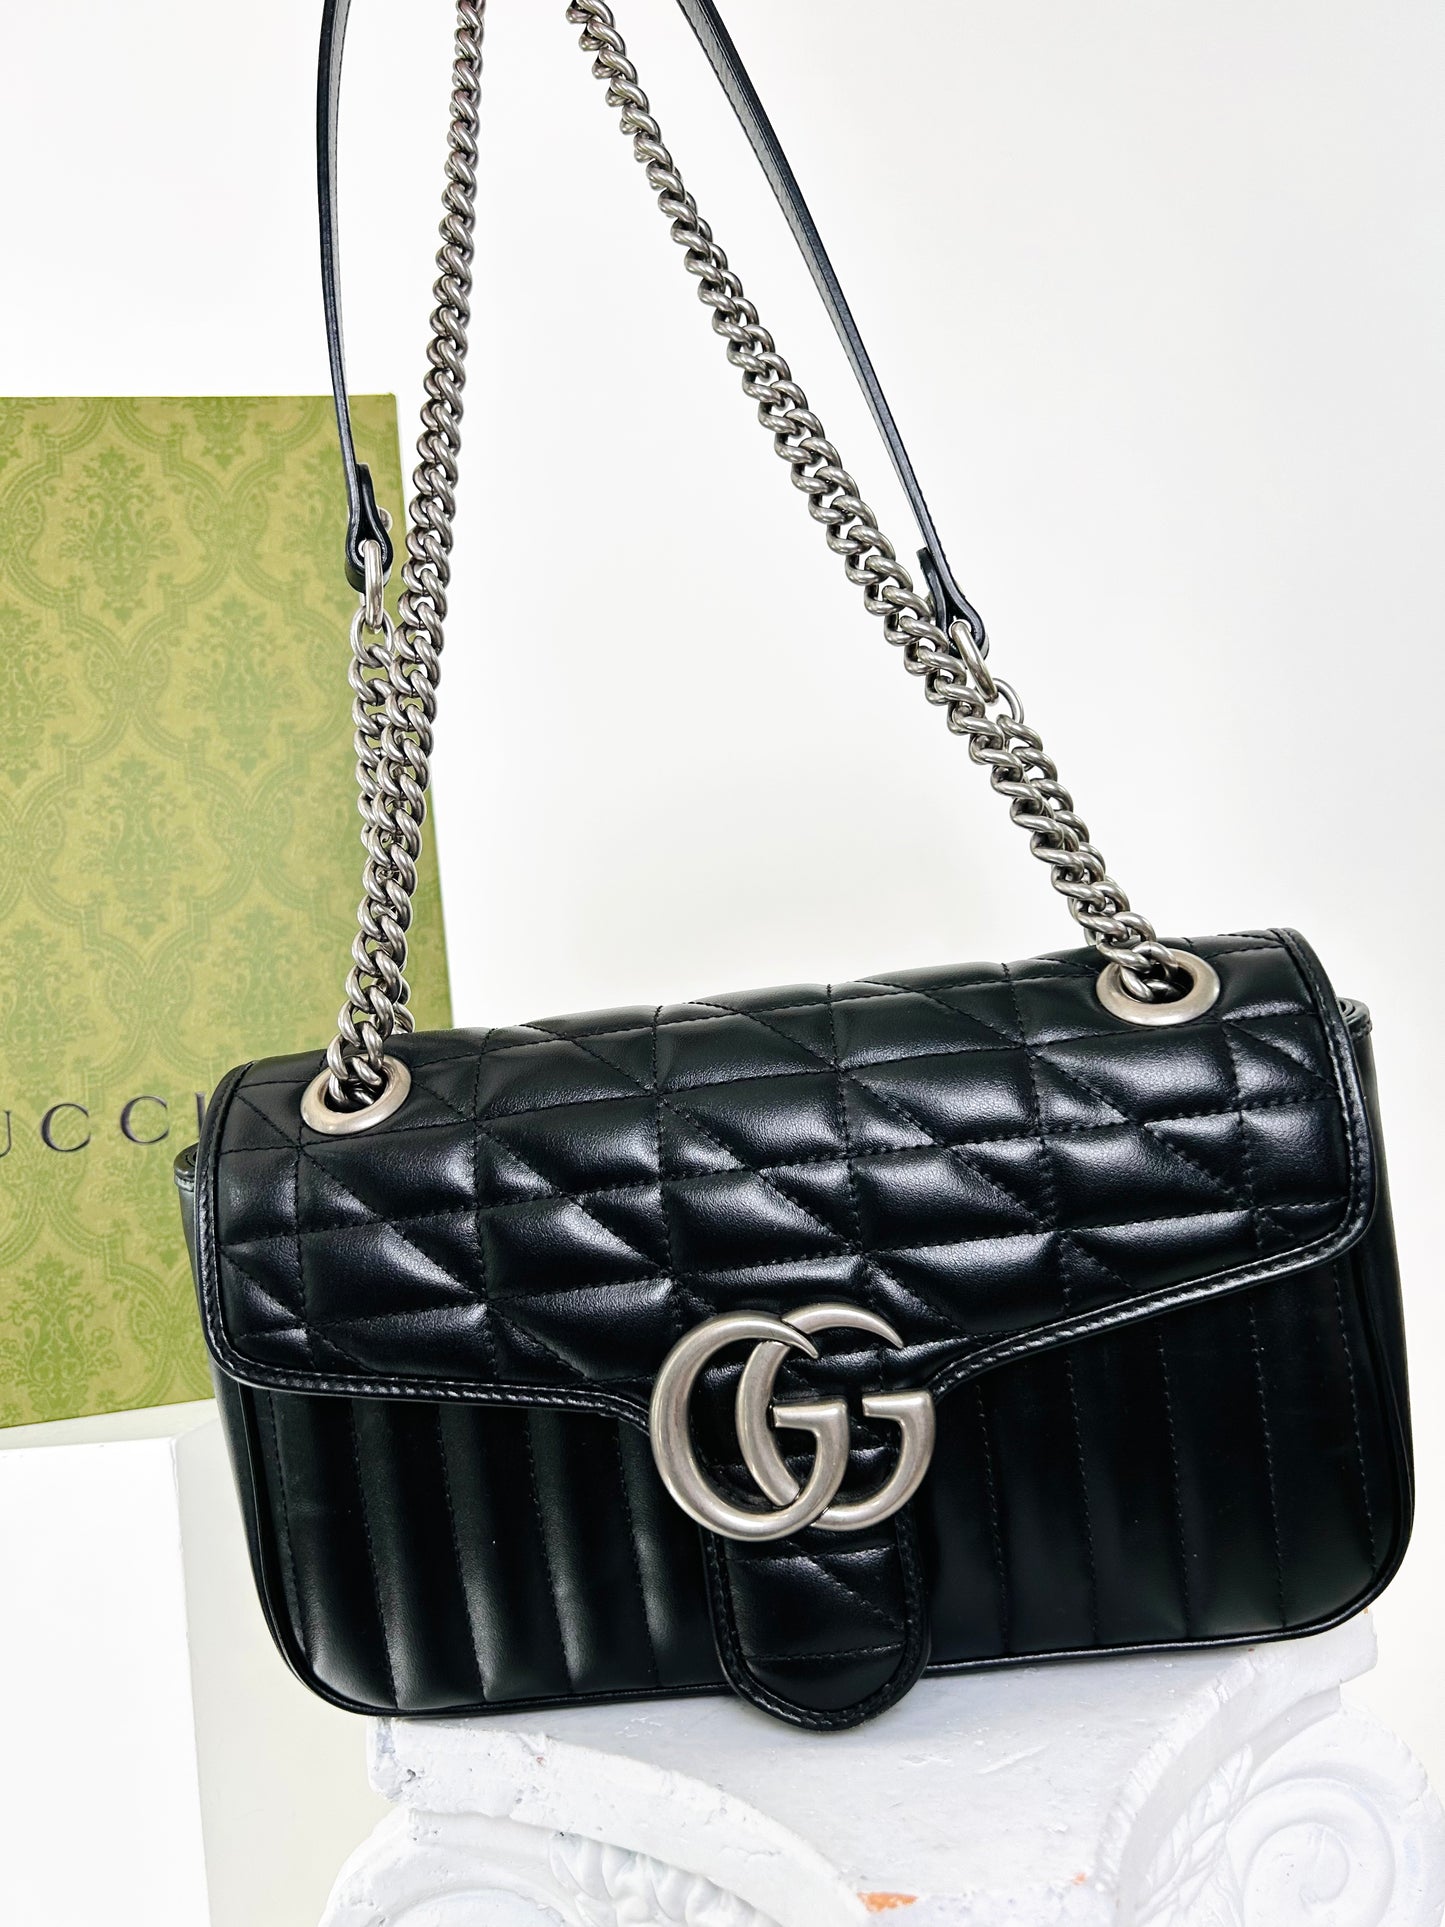 Gucci Marmont Black Bag